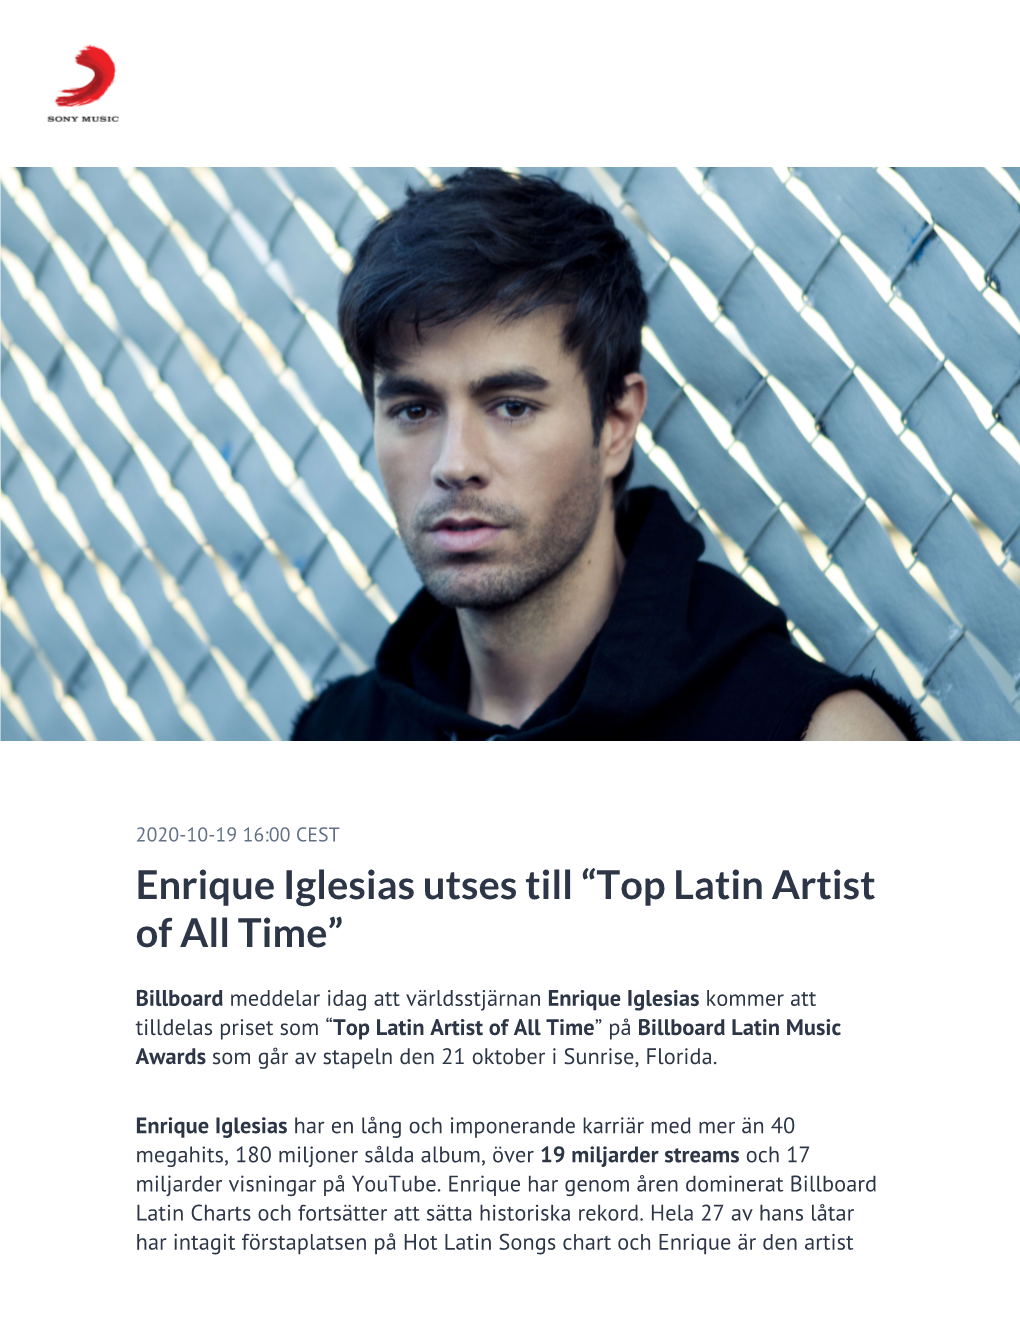 ​Enrique Iglesias Utses Till “Top Latin Artist of All Time”